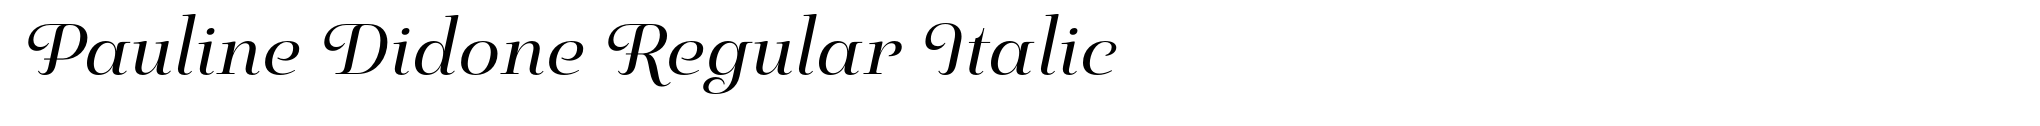 Pauline Didone Regular Italic image